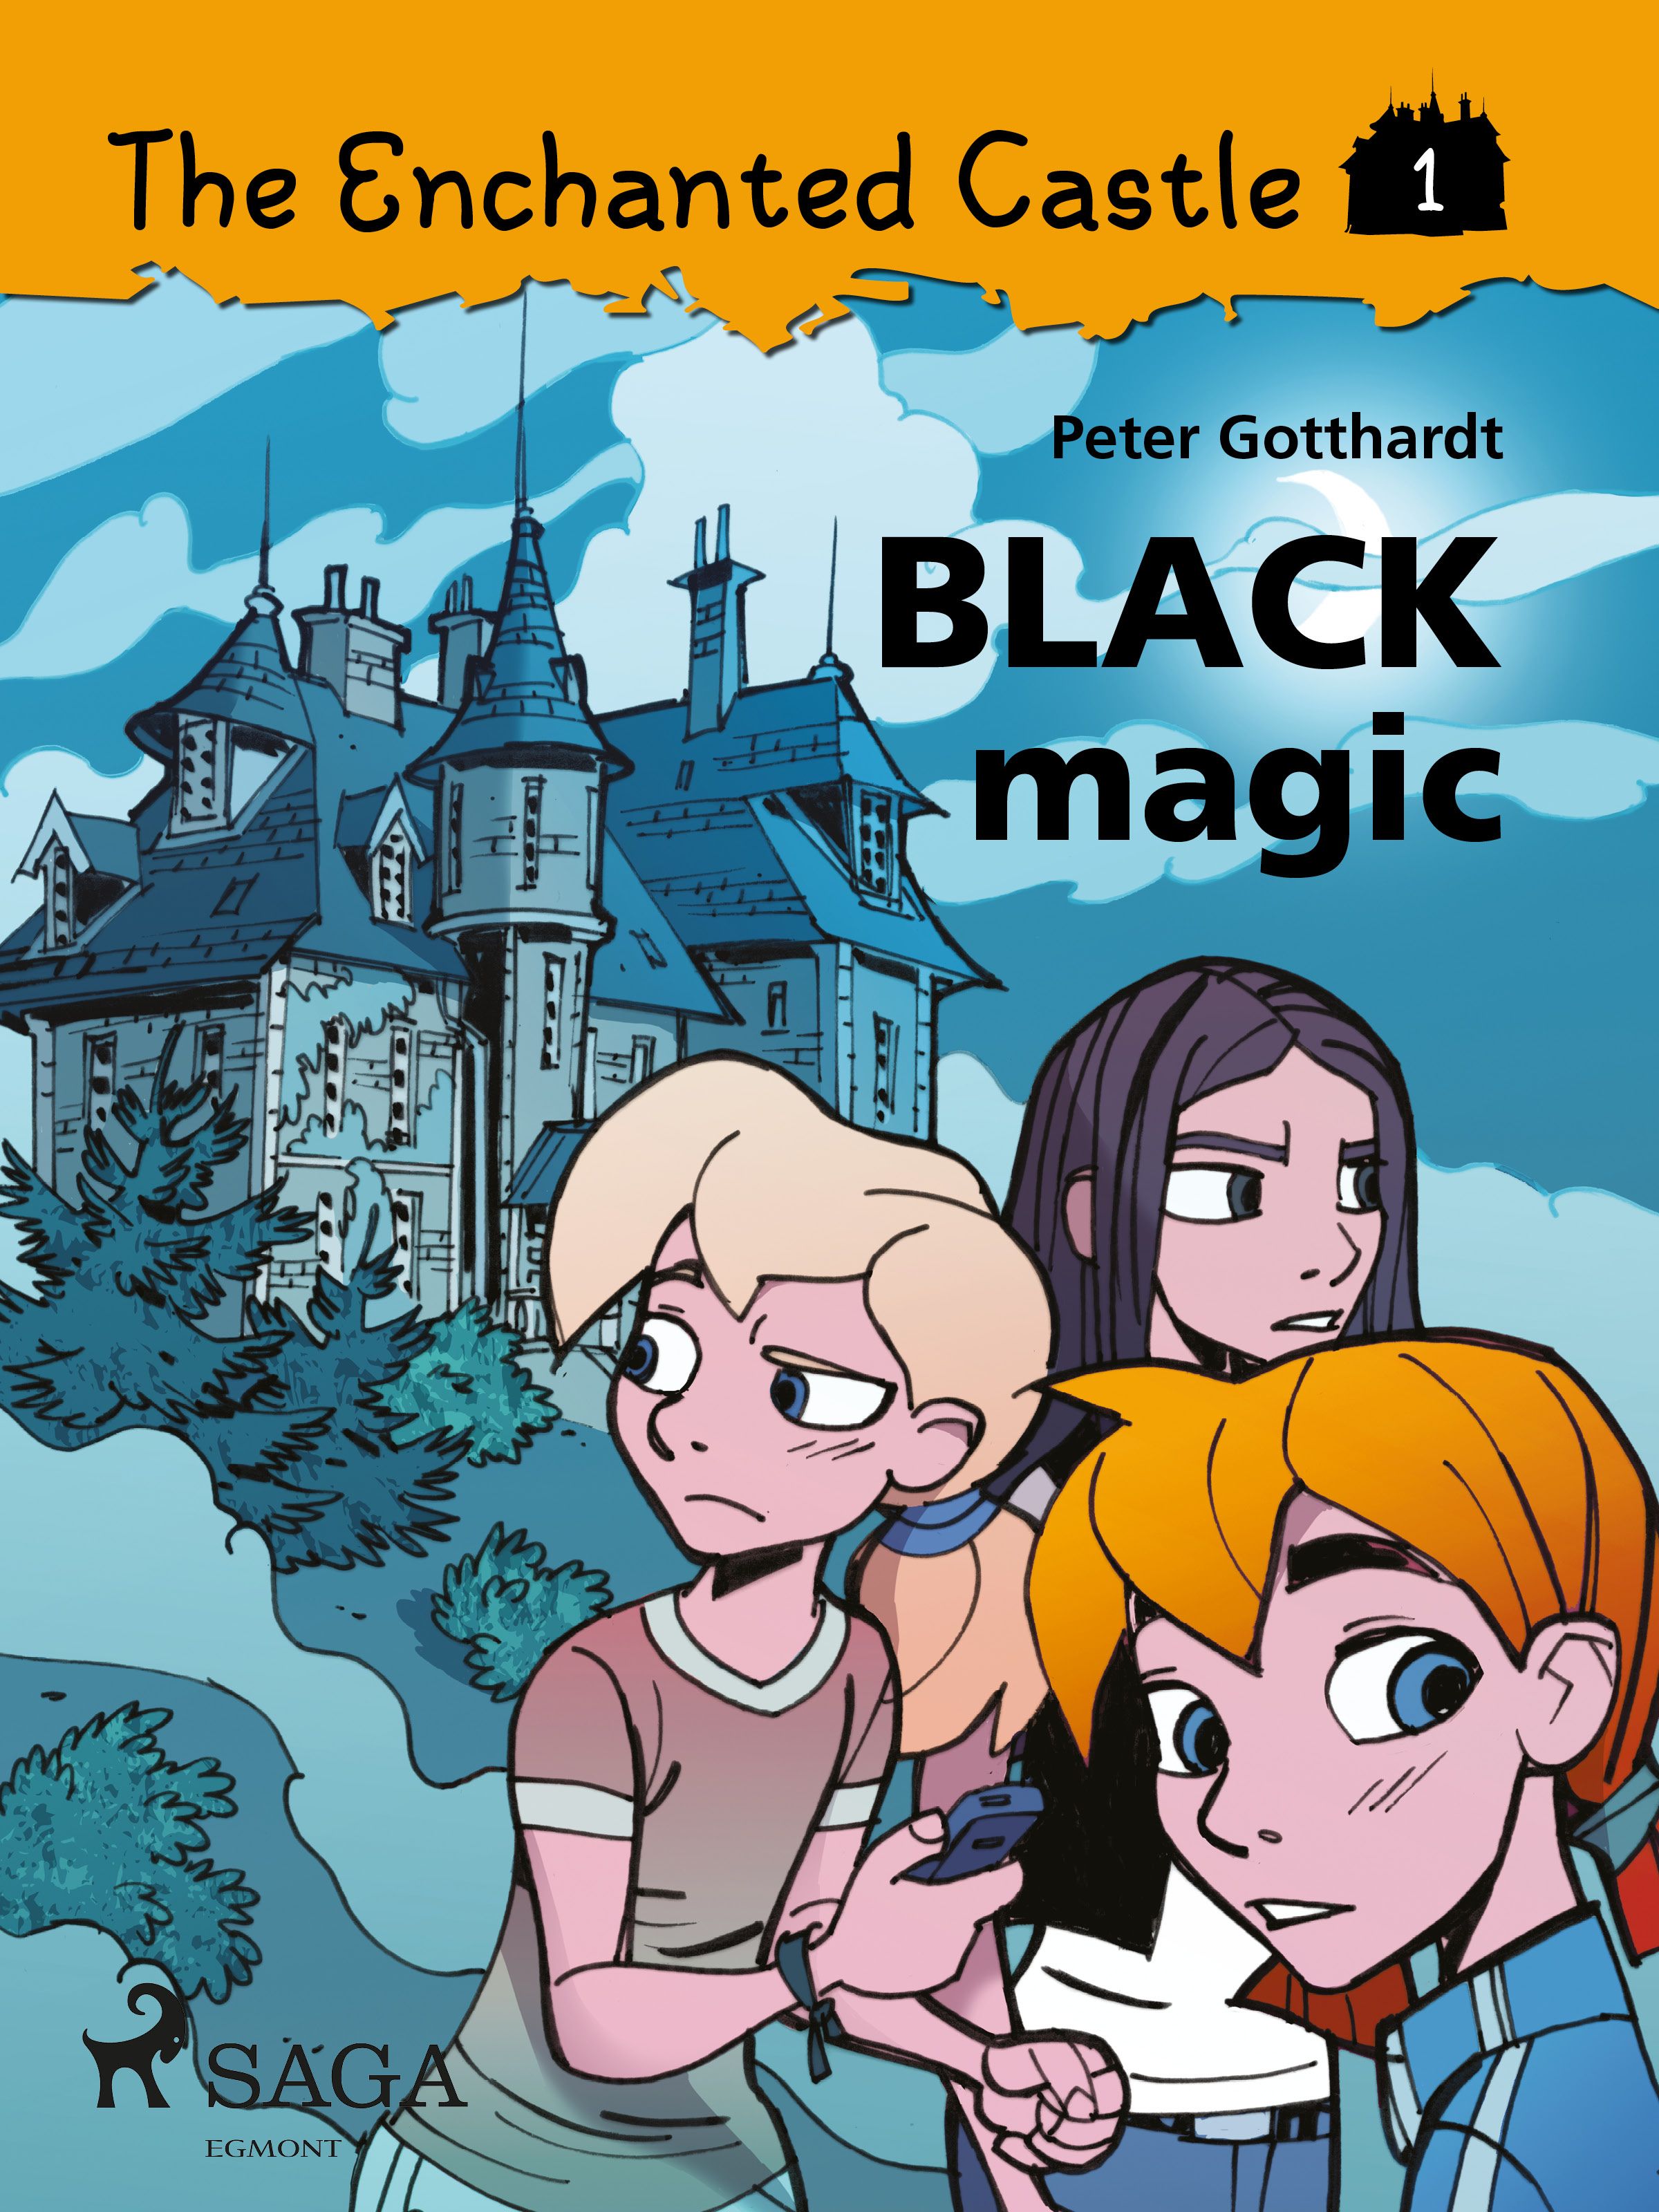 The Enchanted Castle 1 - Black Magic, eBook by Peter Gotthardt